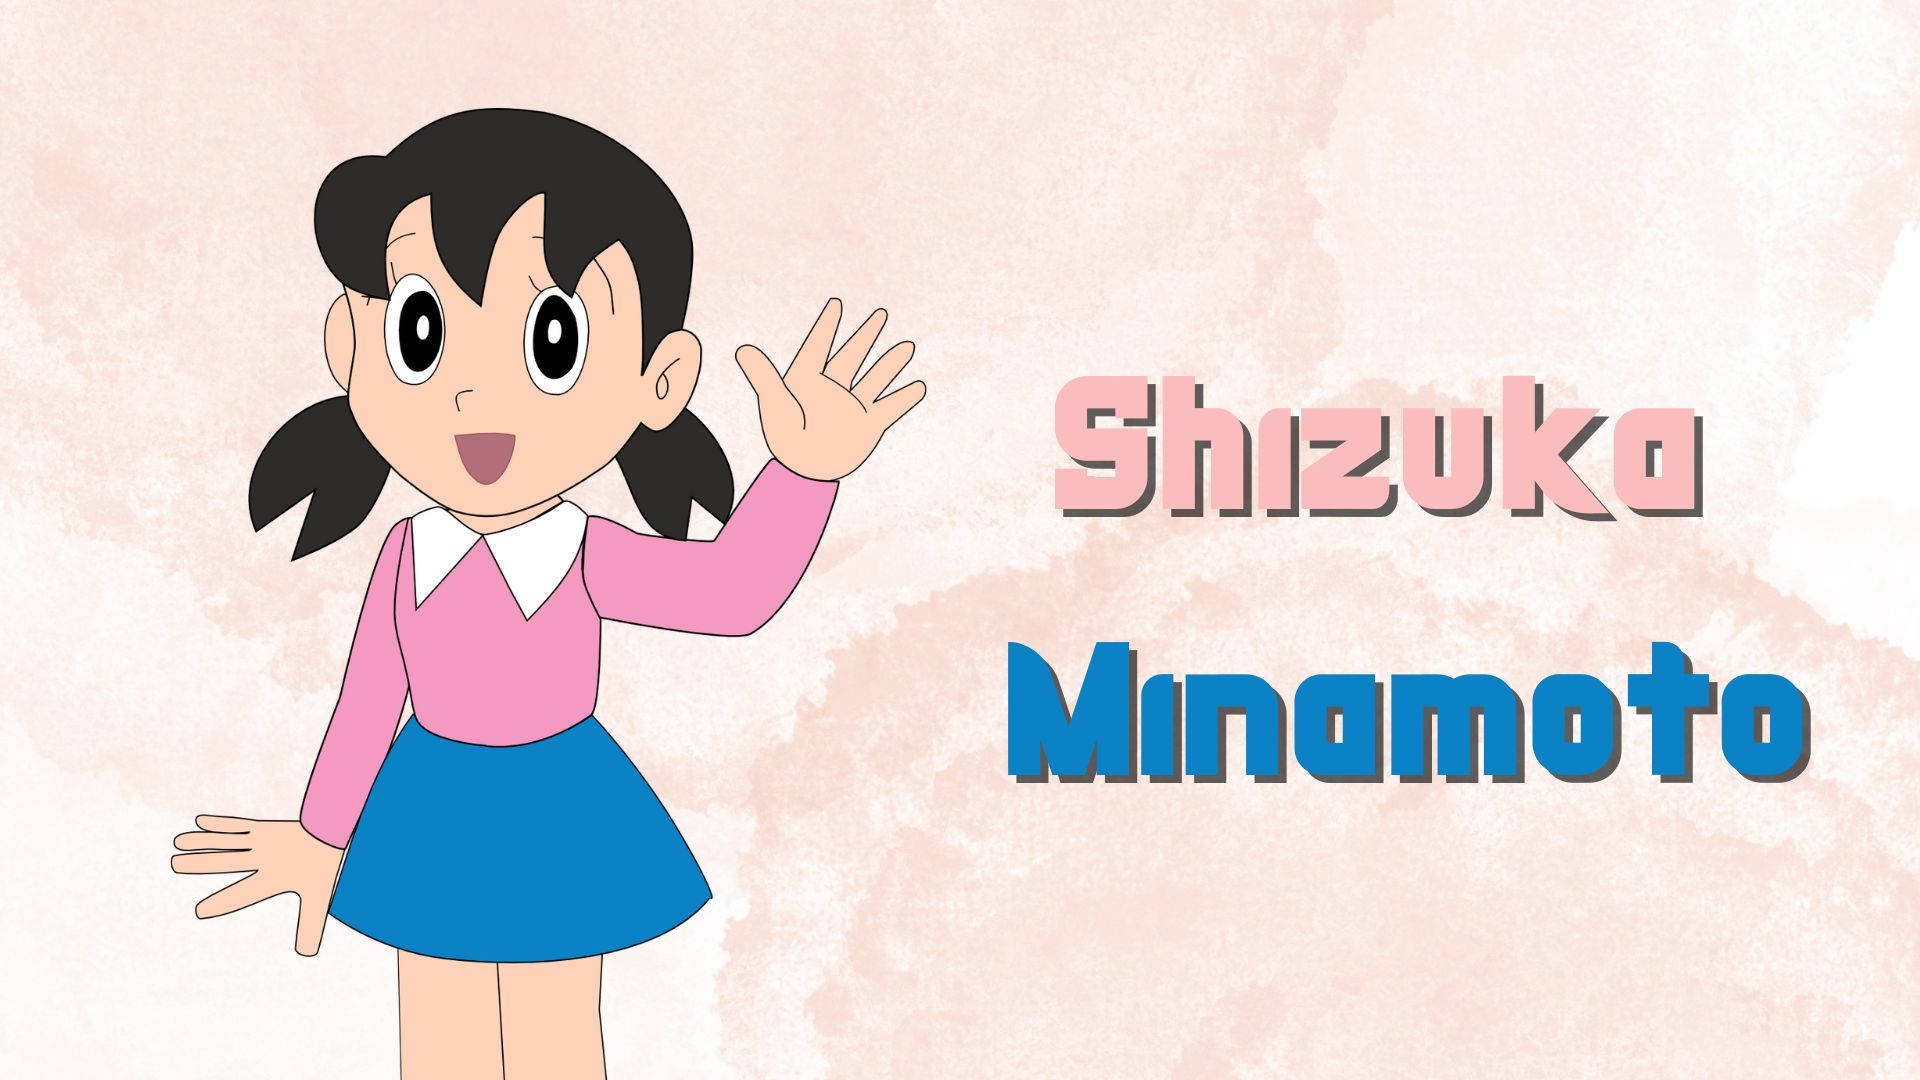 Shizuka Doraemon Pastel Pink Background